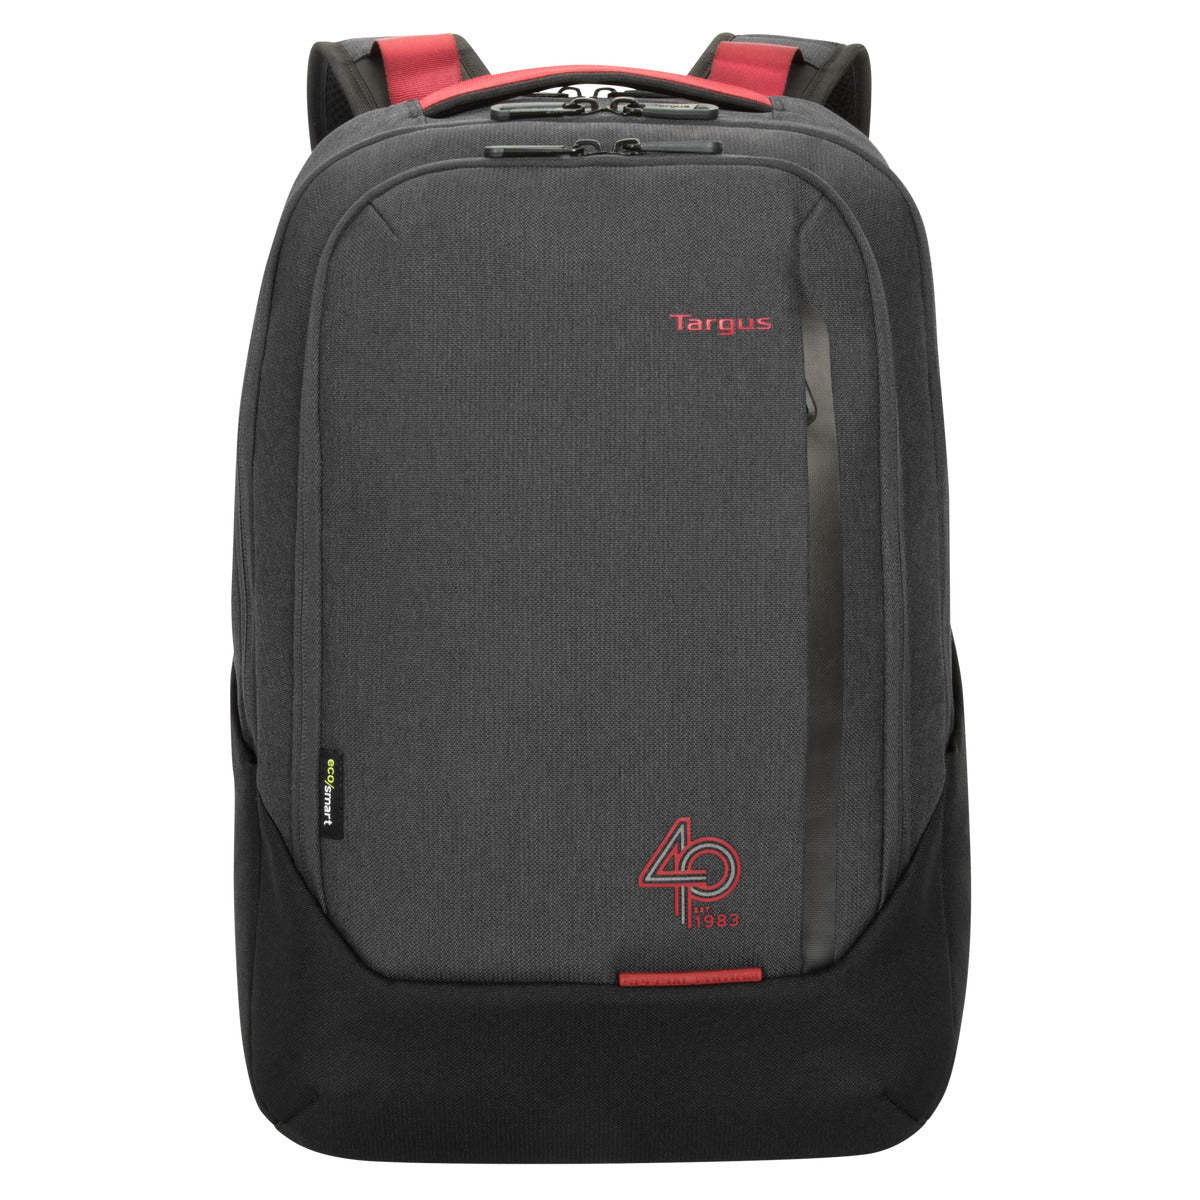 & Targus Laptop Cases | Laptop Protective Bags | Cases